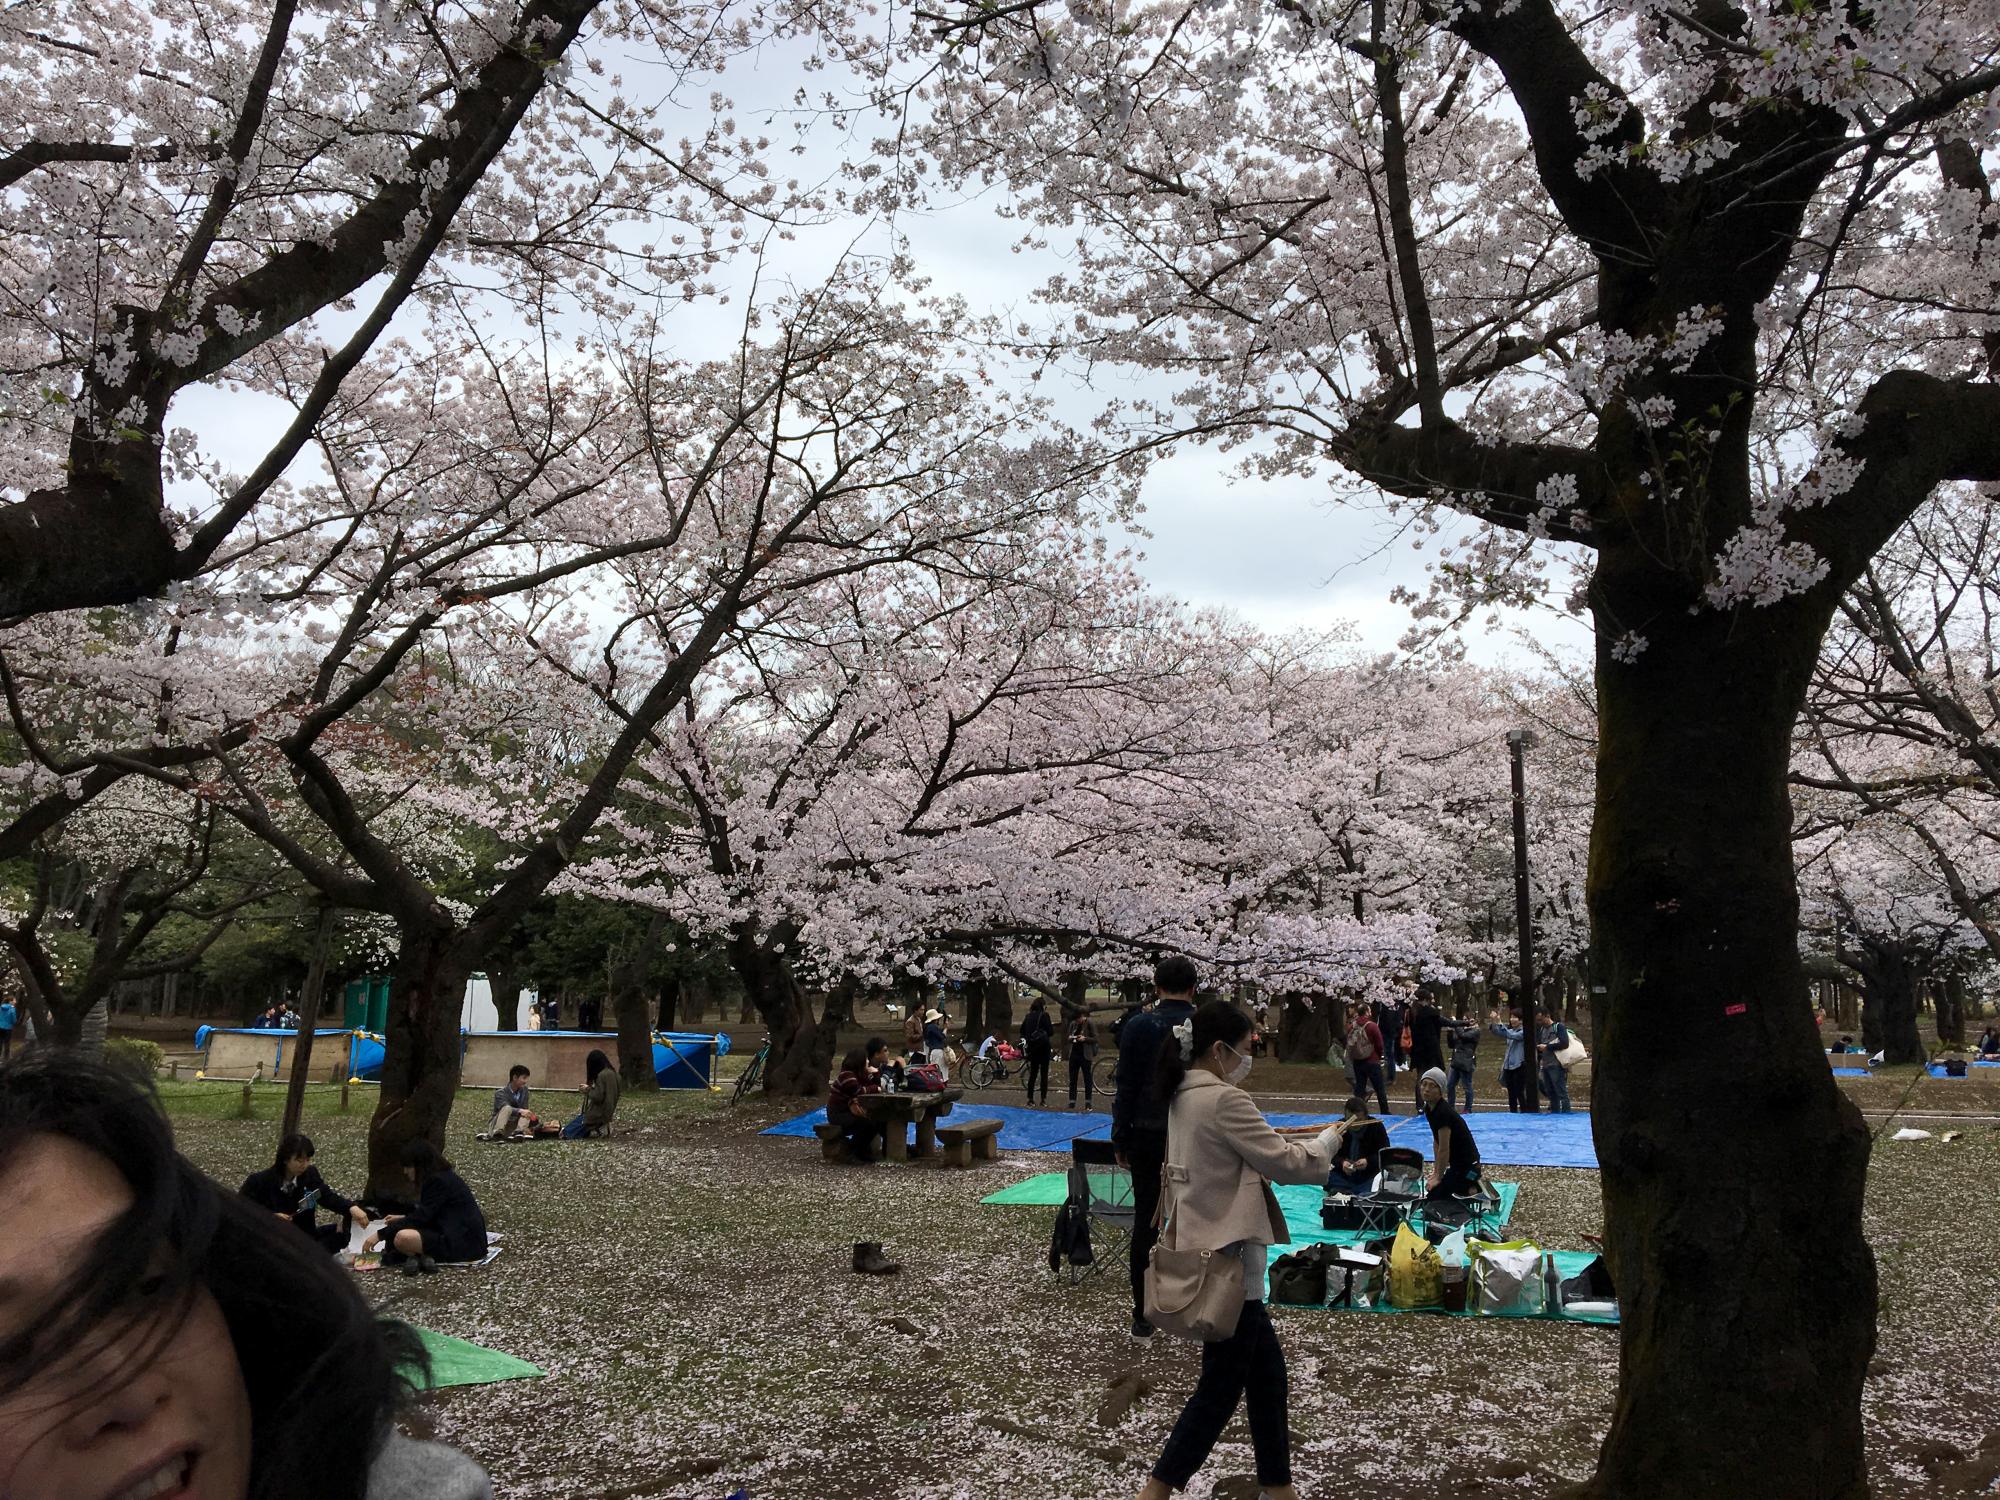 Tokyo (2017) - Cherry Blossoms #1